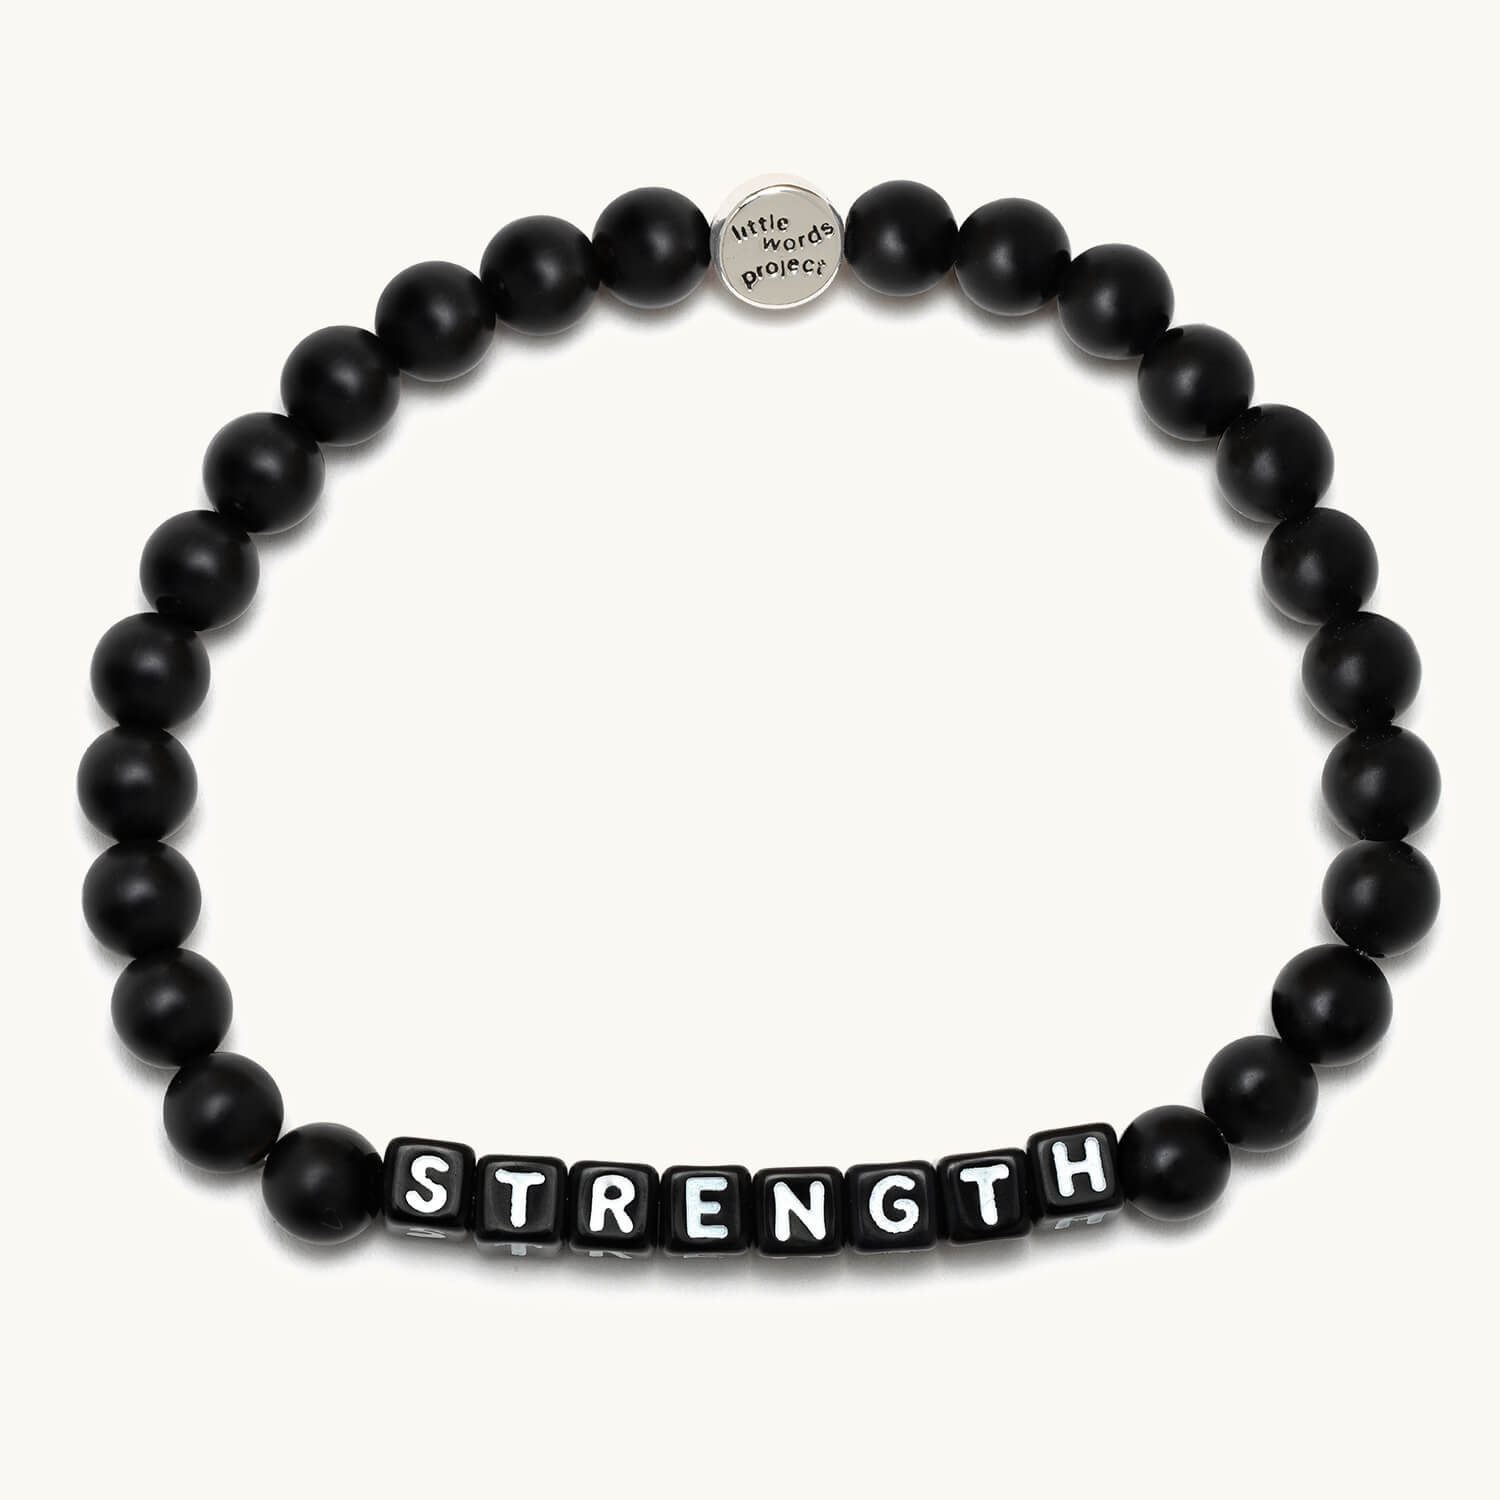 Strength- Little Words Project Bracelet 